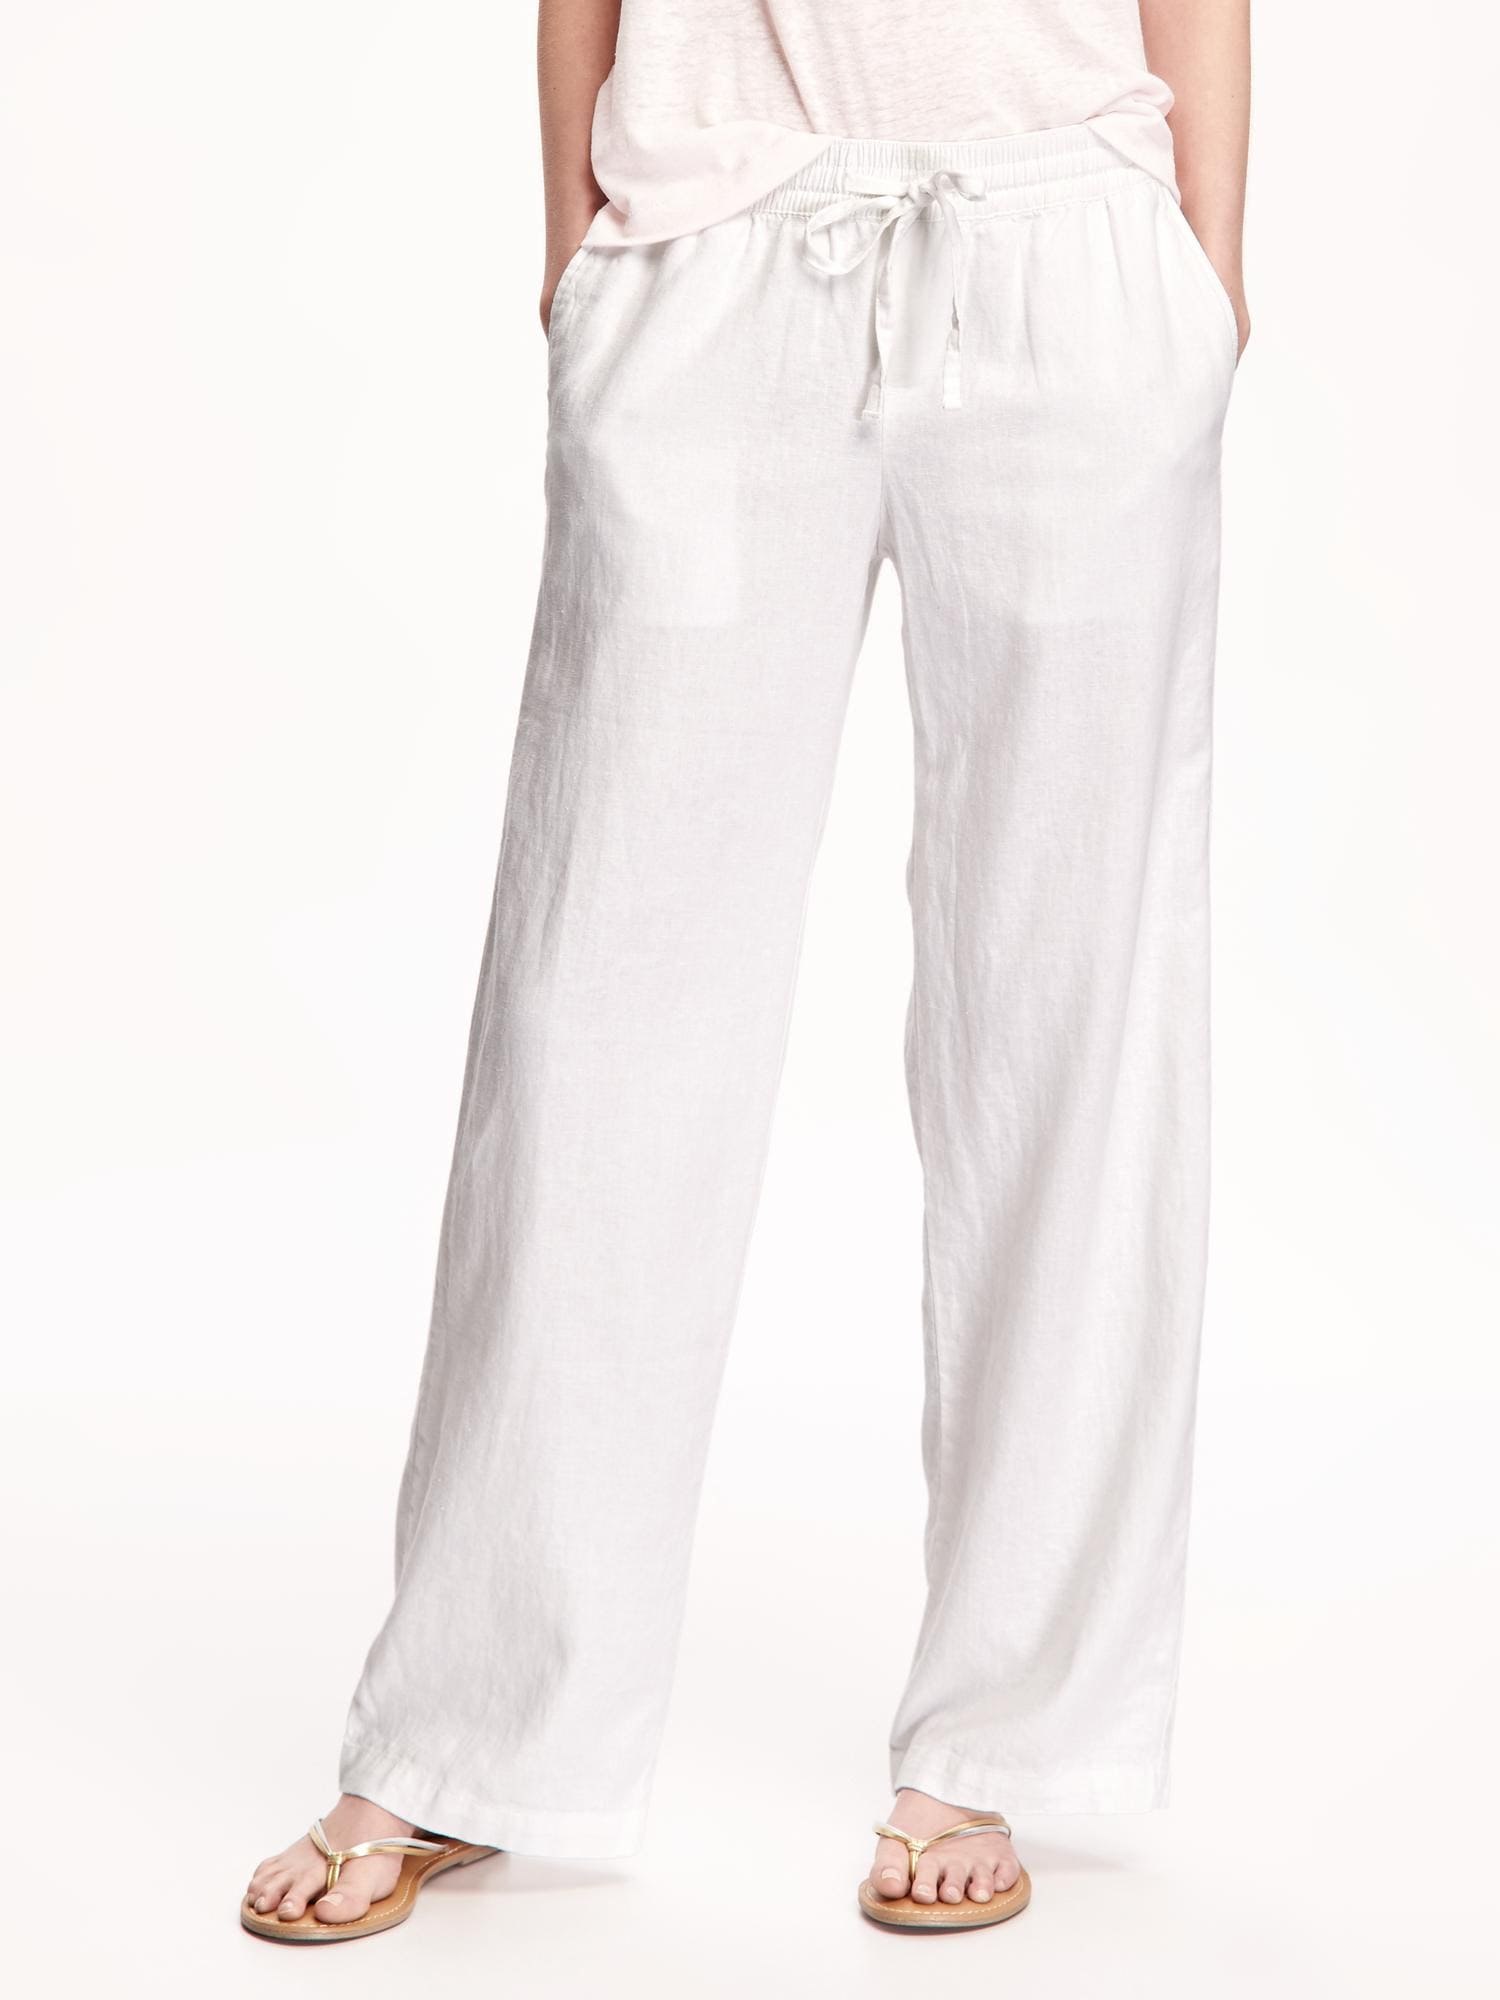 Валберис белые брюки